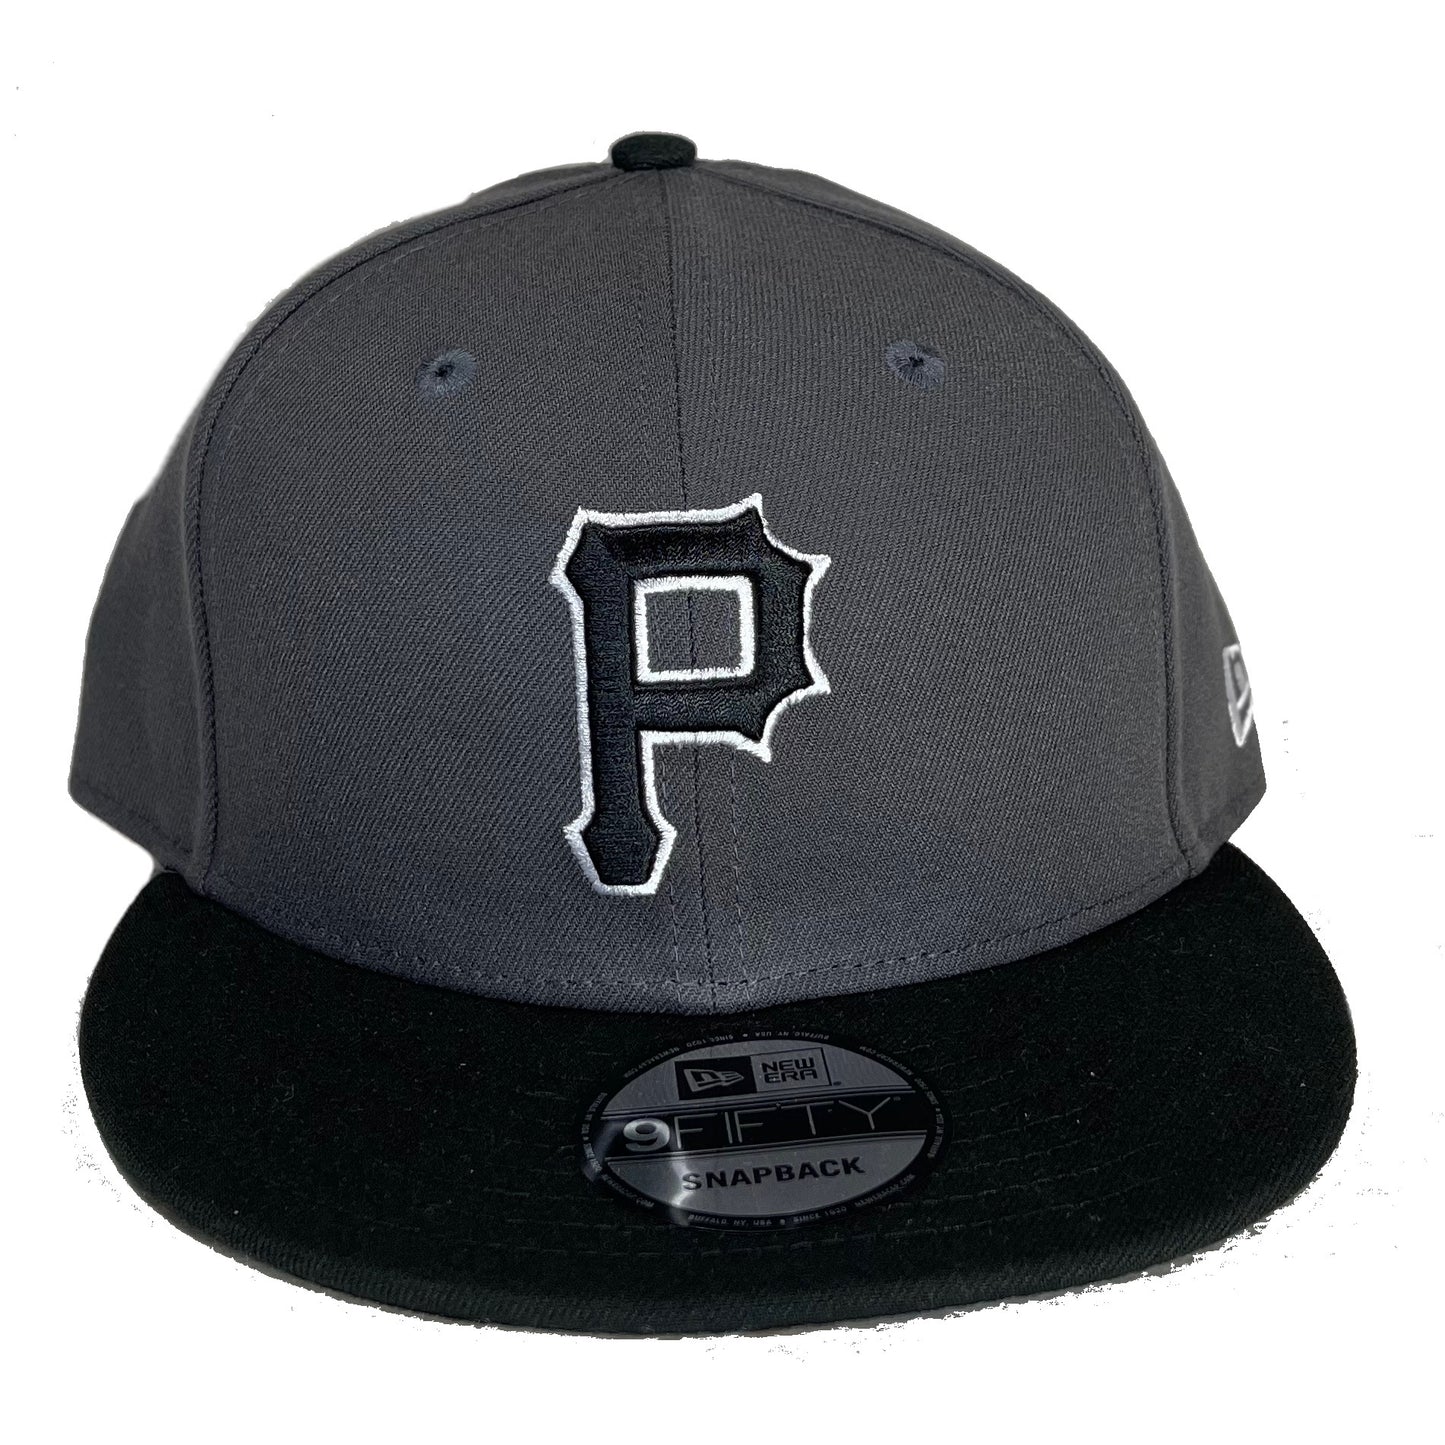 Pittsburgh Pirates (Grey/Black) Snapback